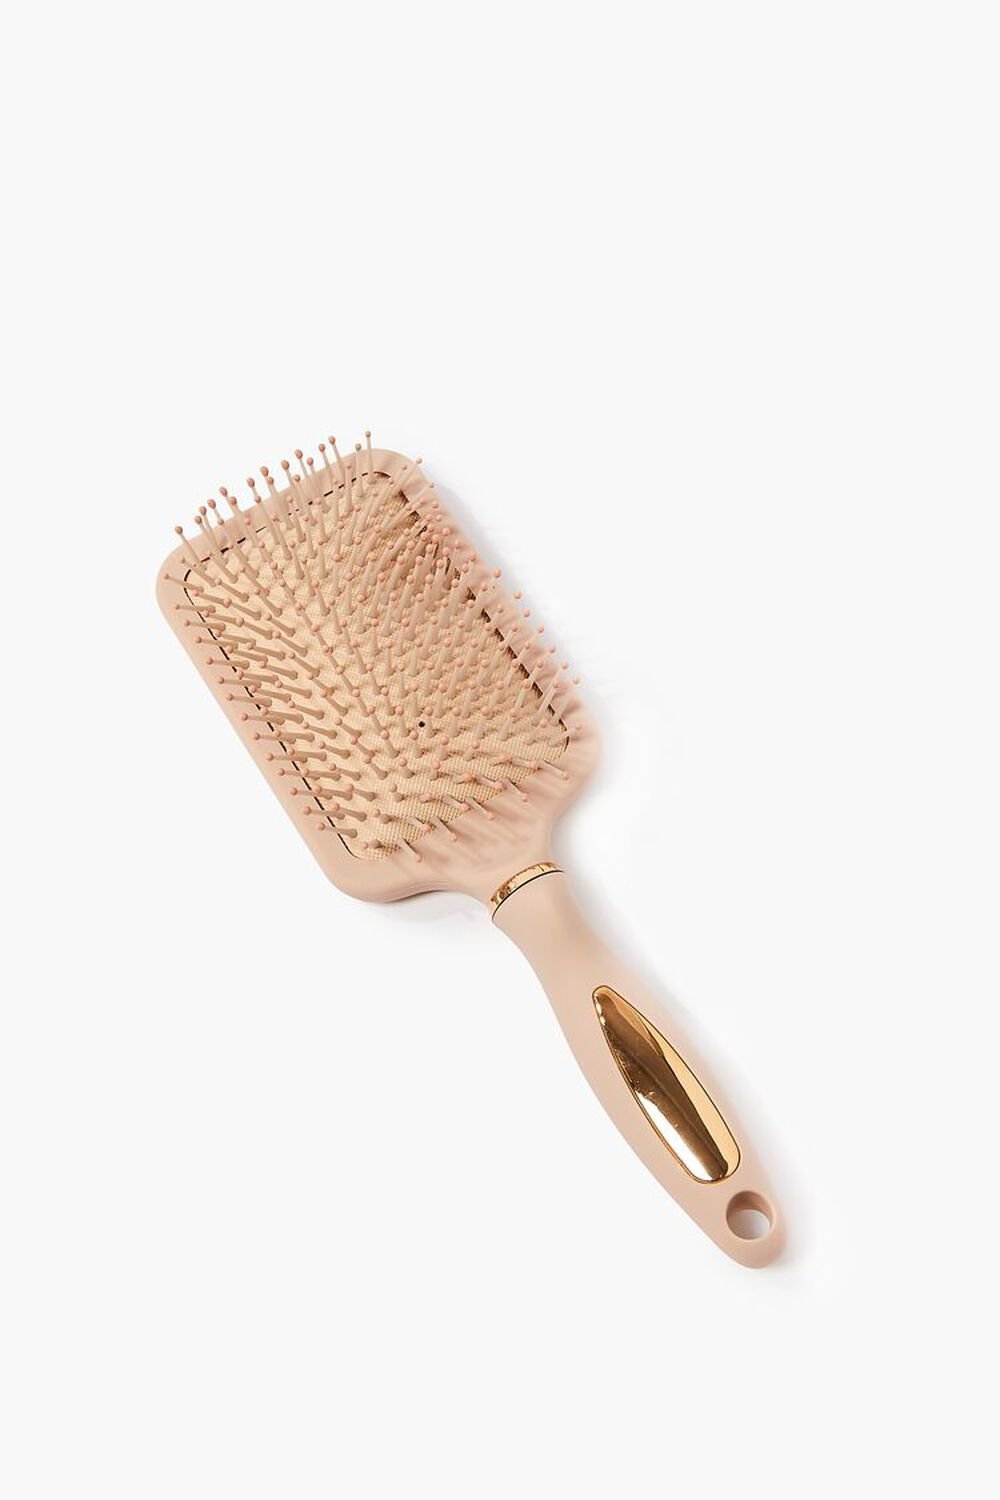 Square Paddle Hair Brush, image 1